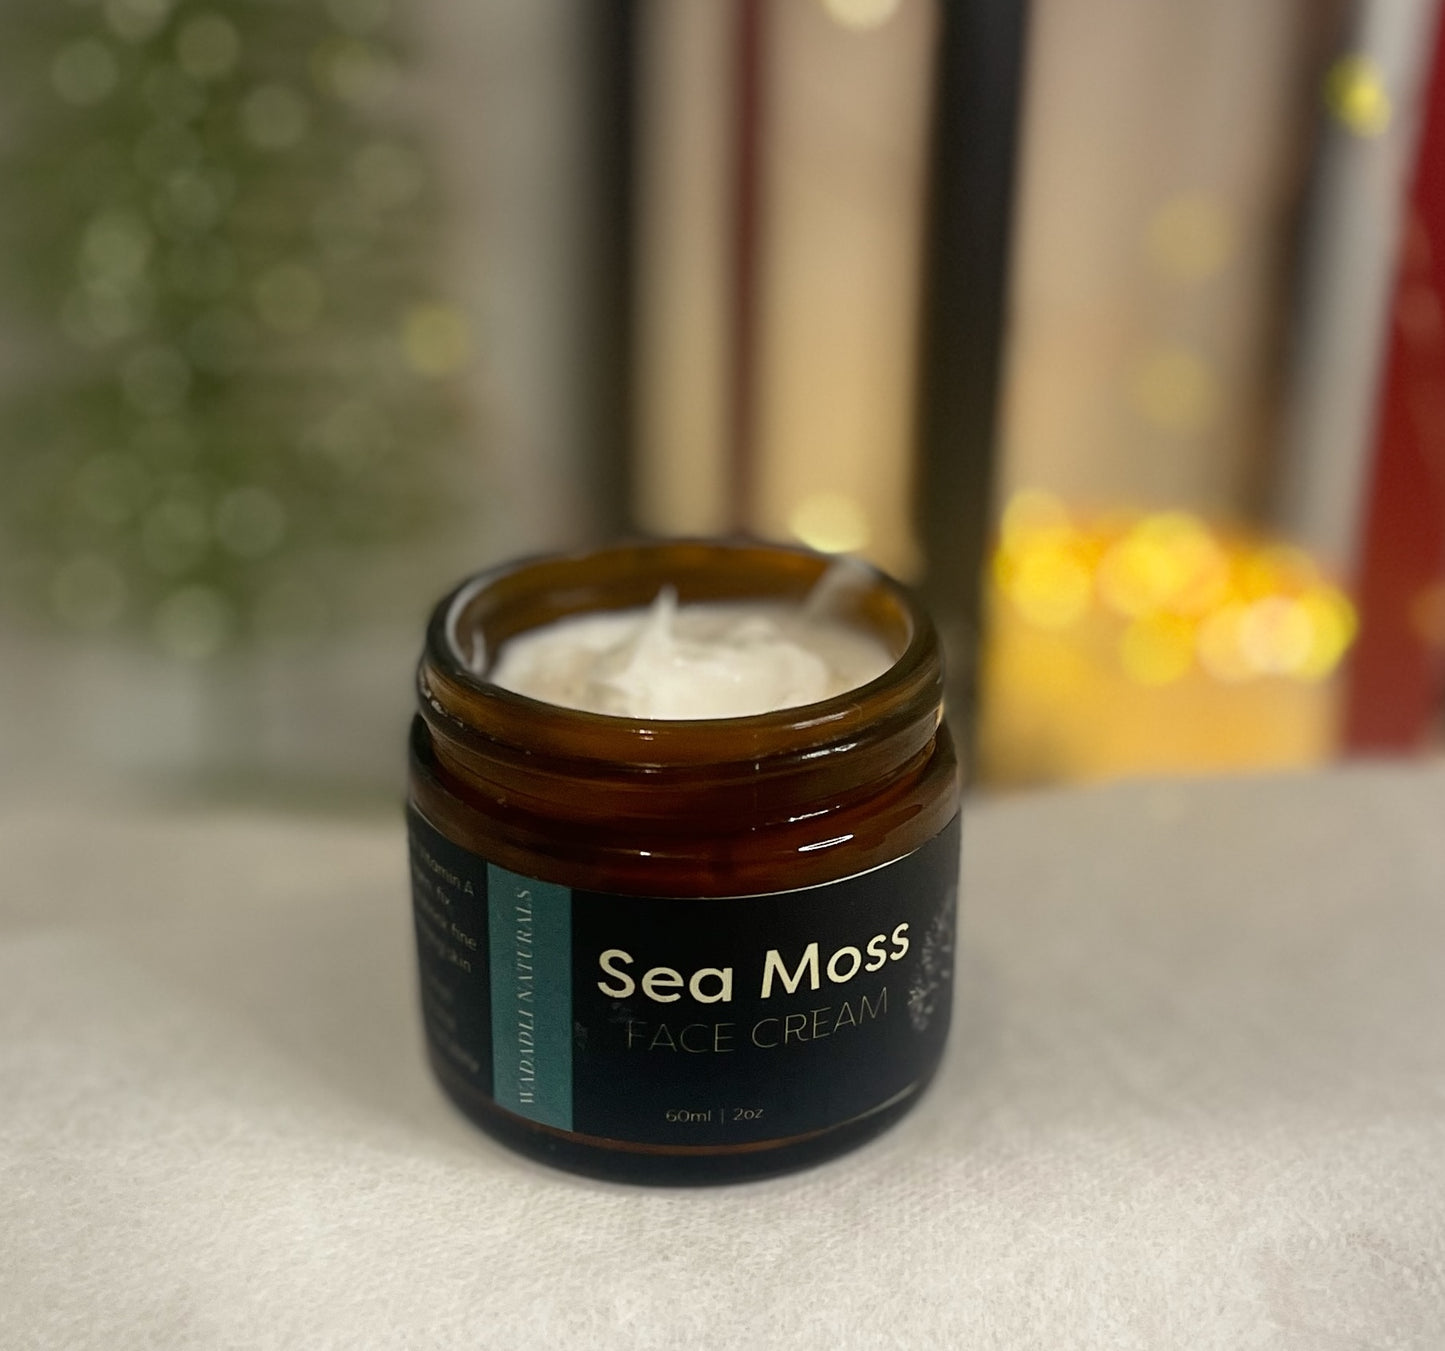 Sea Moss Face Cream